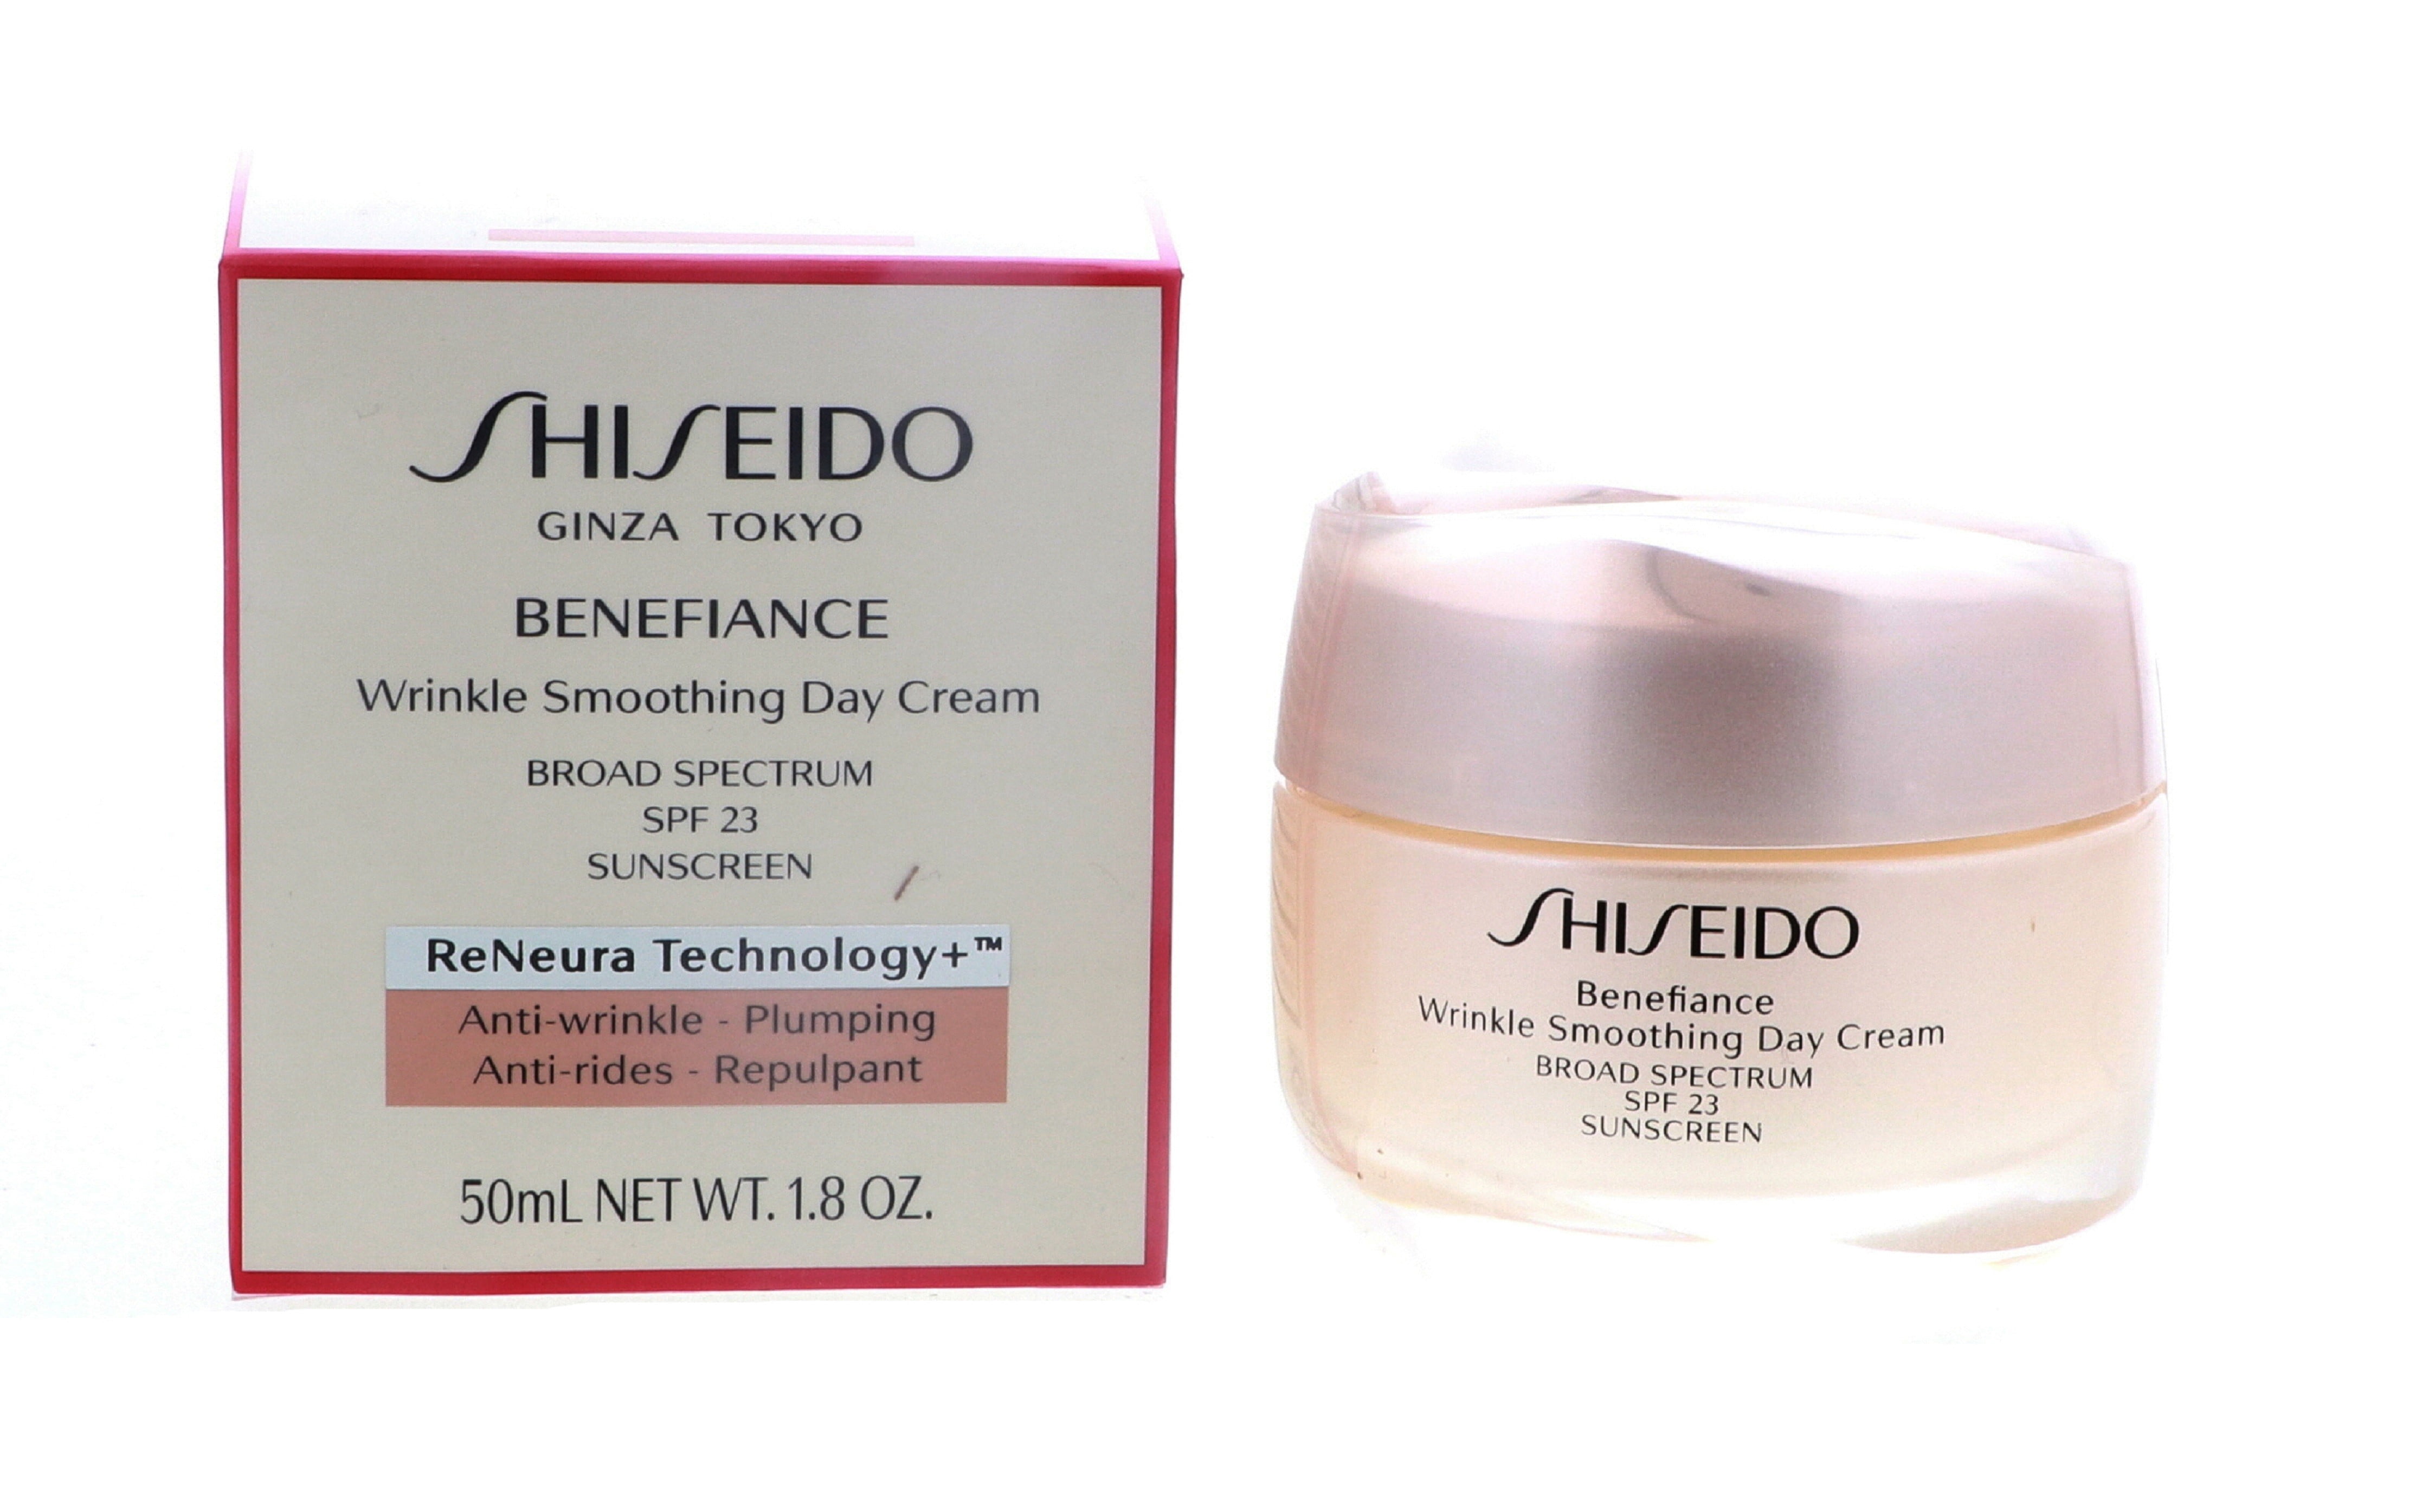 Shiseido Ginza Tokyo Benefiance Wrinkle Smoothing Day Cream broad Spectrum SPF 23 Sunscreen.